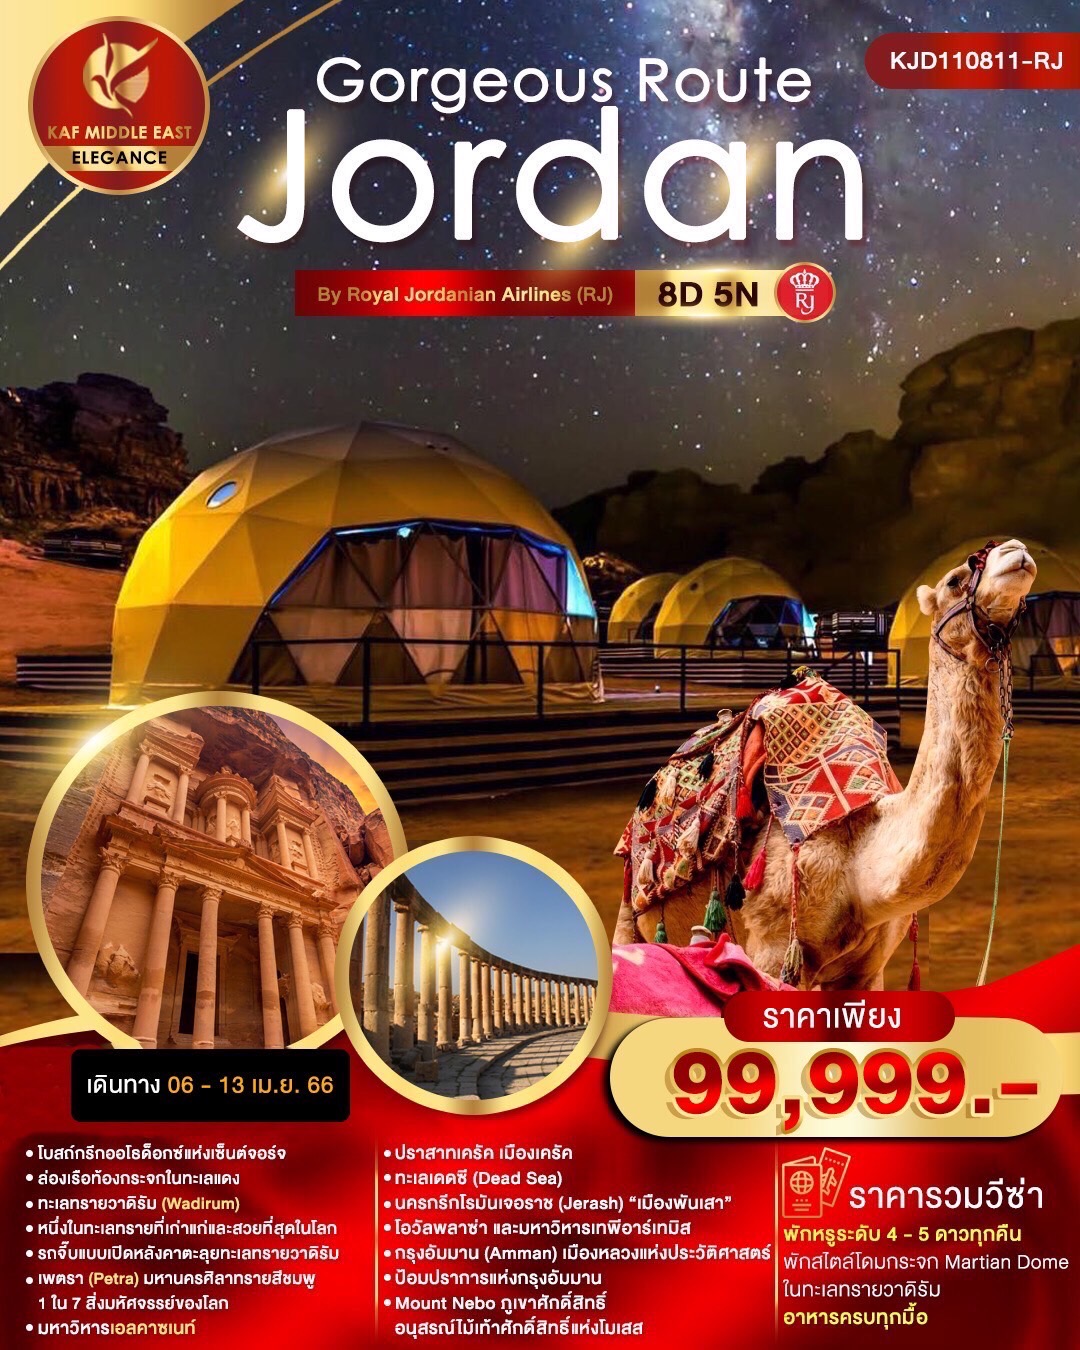 Gorgeous Route Jordan